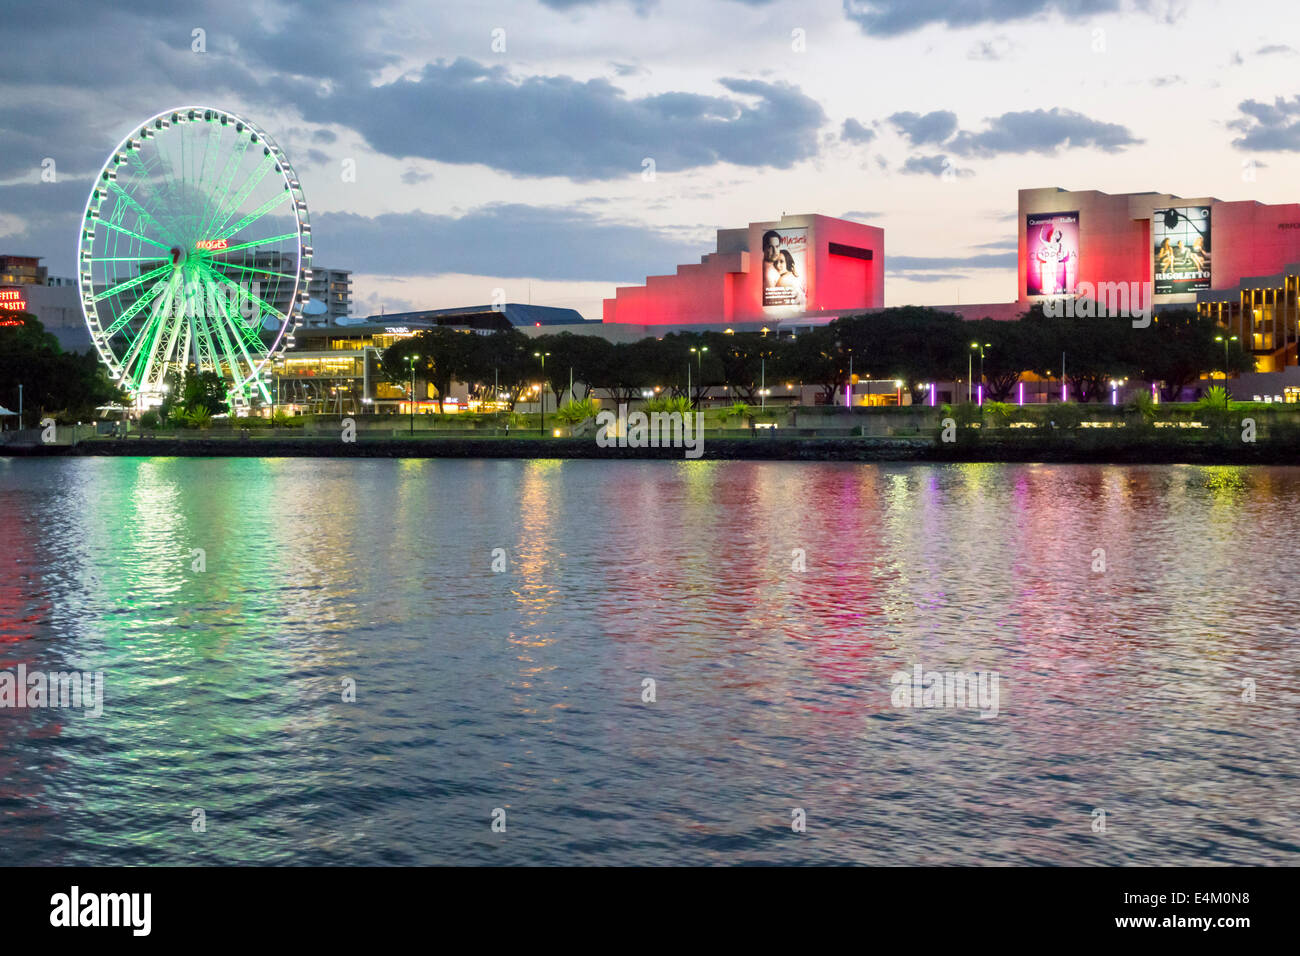 Brisbane Australia,Southbank,The Brisbane Wheel,Ferris,Brisbane River,Queensland Performing Arts Centre,center,dusk,night,AU140316179 Stock Photo